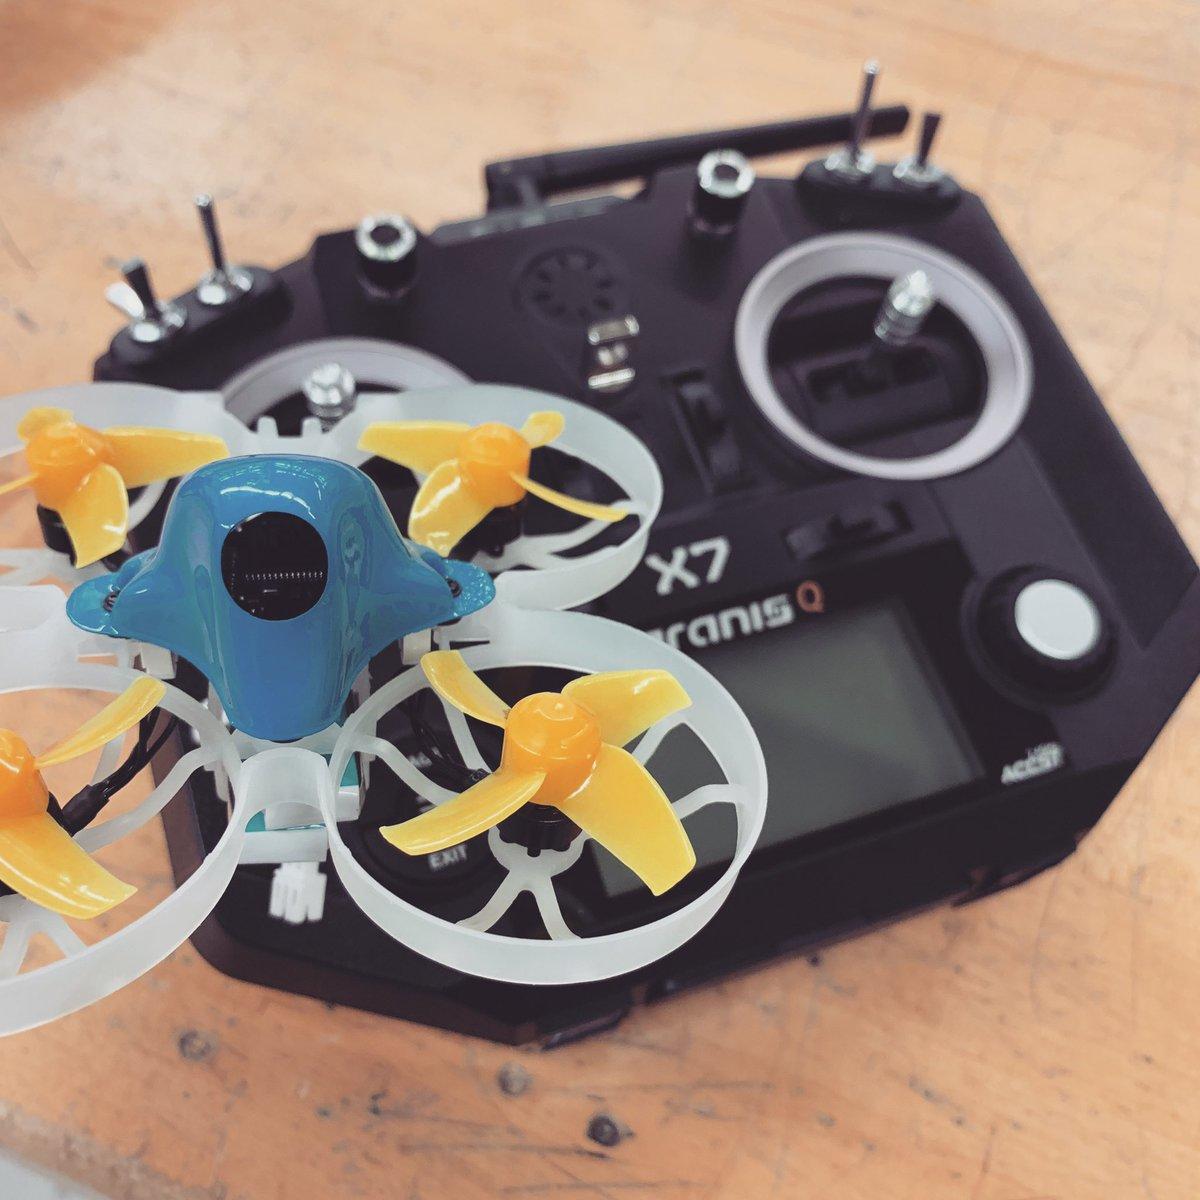 Drone parts printed with a 3D printer at Shrewsbury